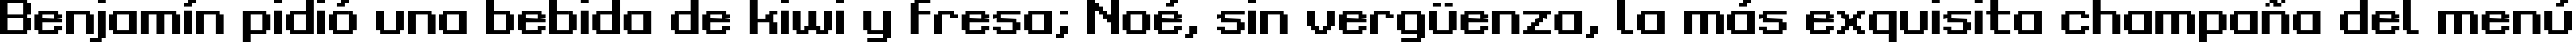 Пример написания шрифтом Grixel Kyrou 9 Regular Bold текста на испанском